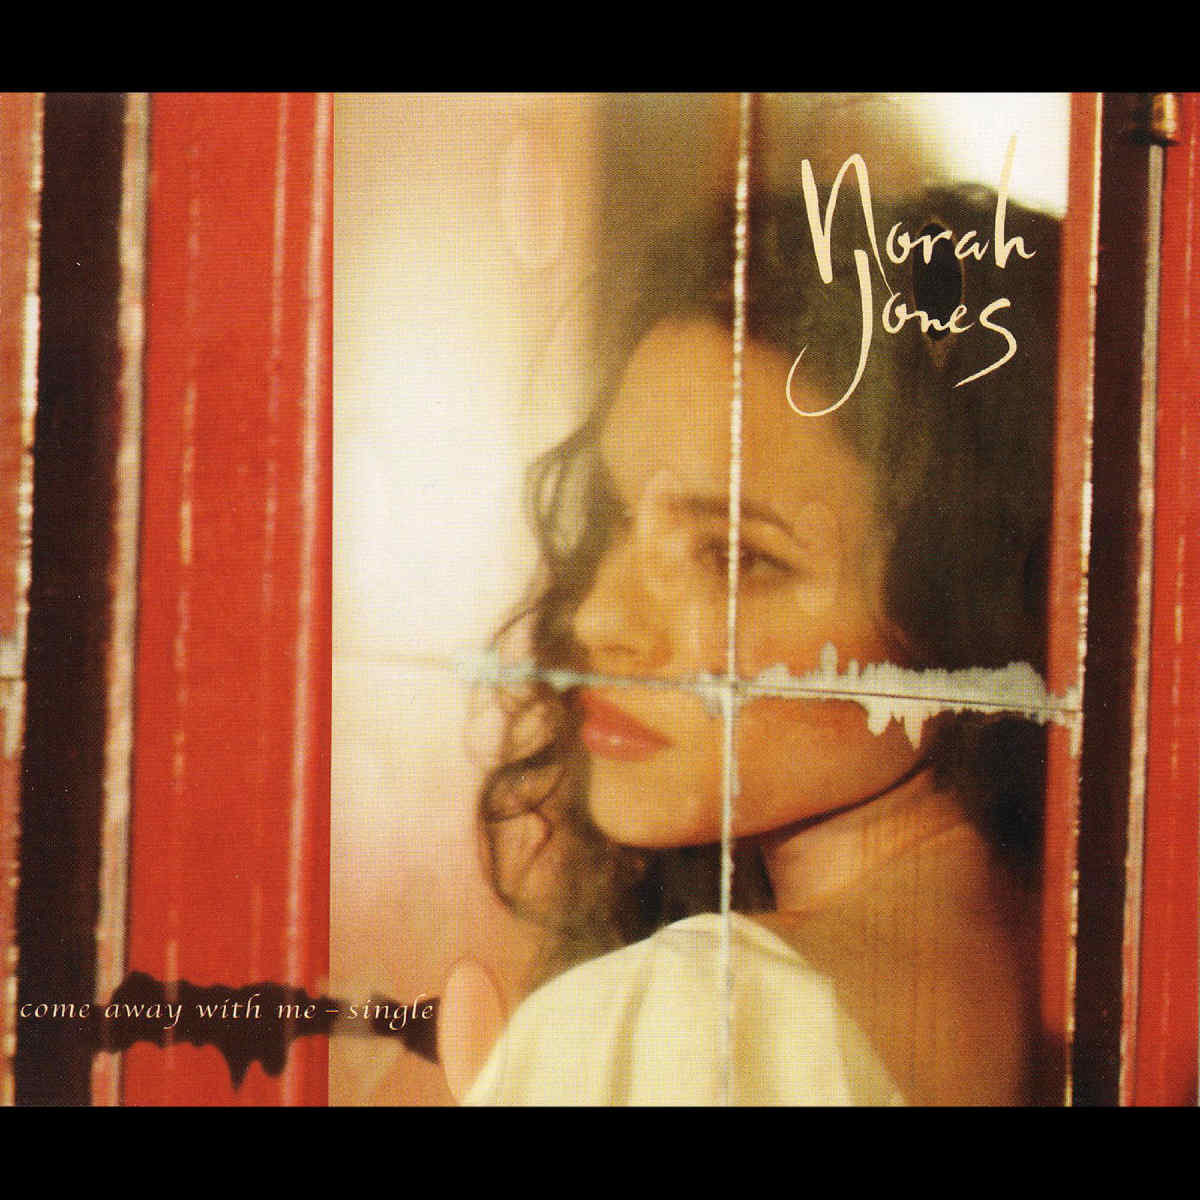 SoundHound - Turn Me On by Norah Jones